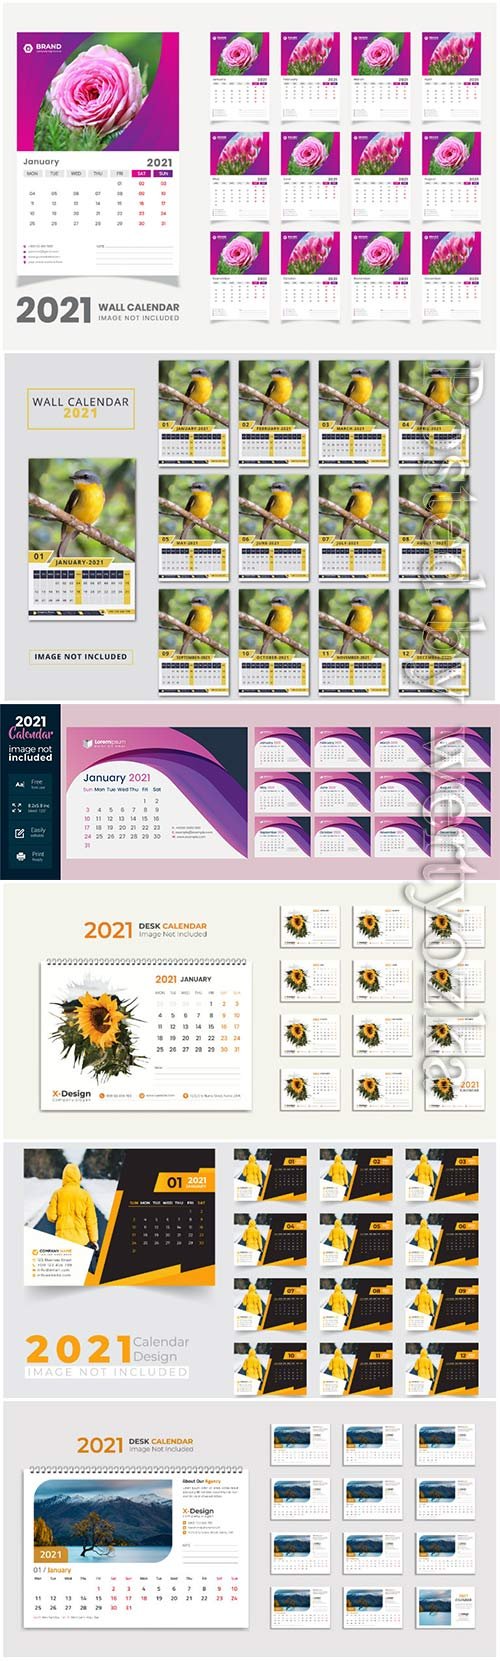 Desk calendar 2021 template design for new year vol 5